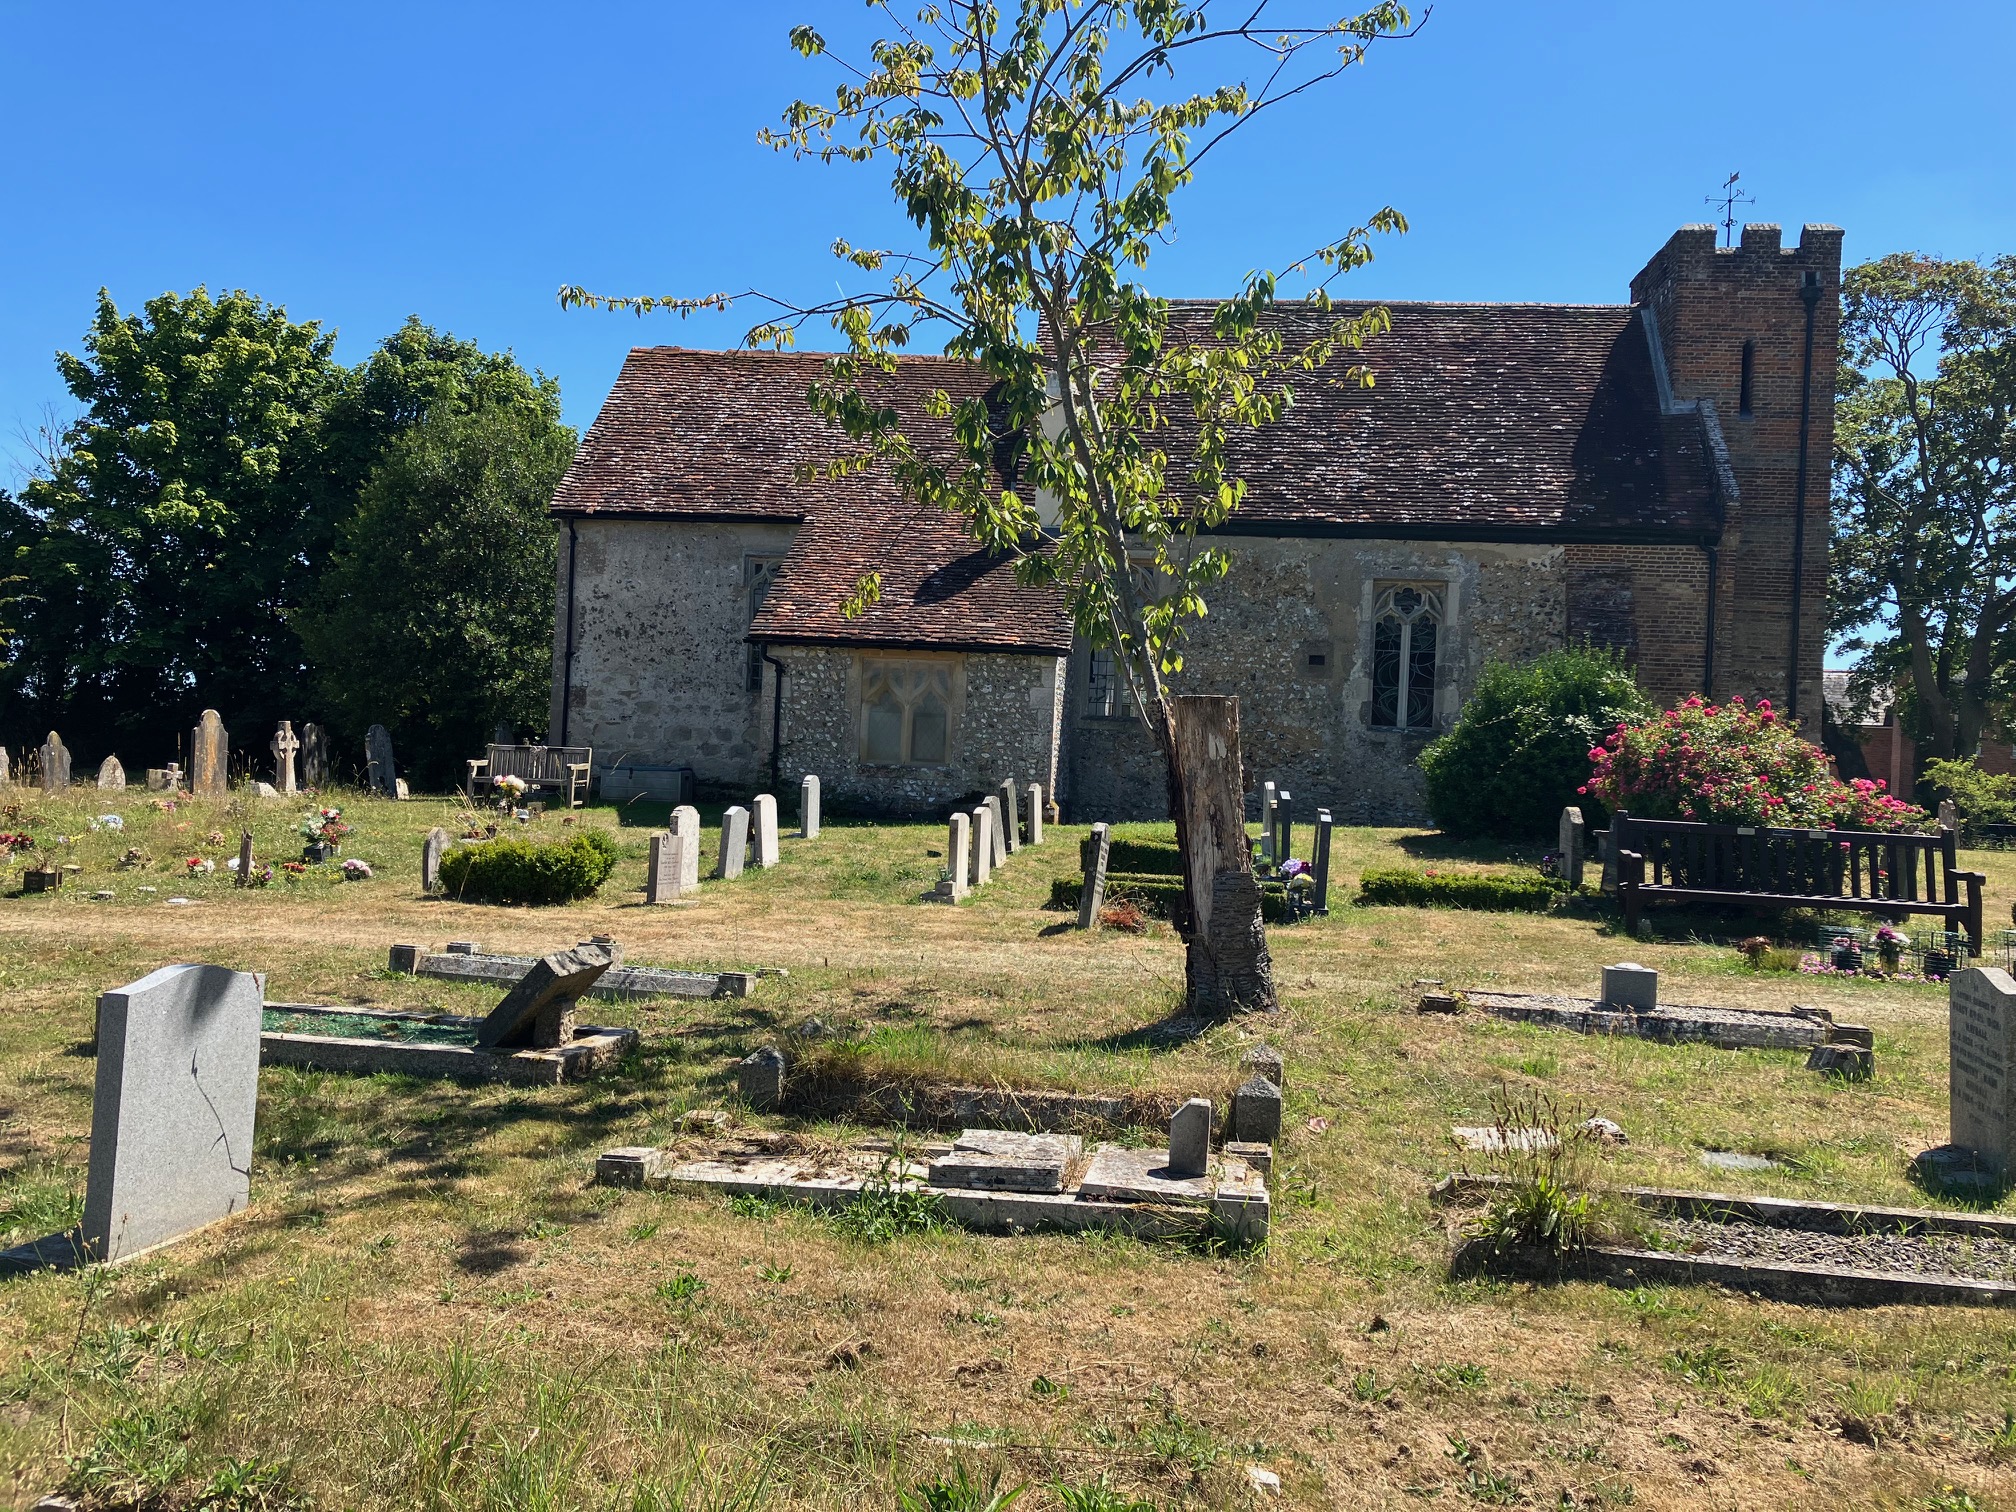 Caring for a treasured churchyard